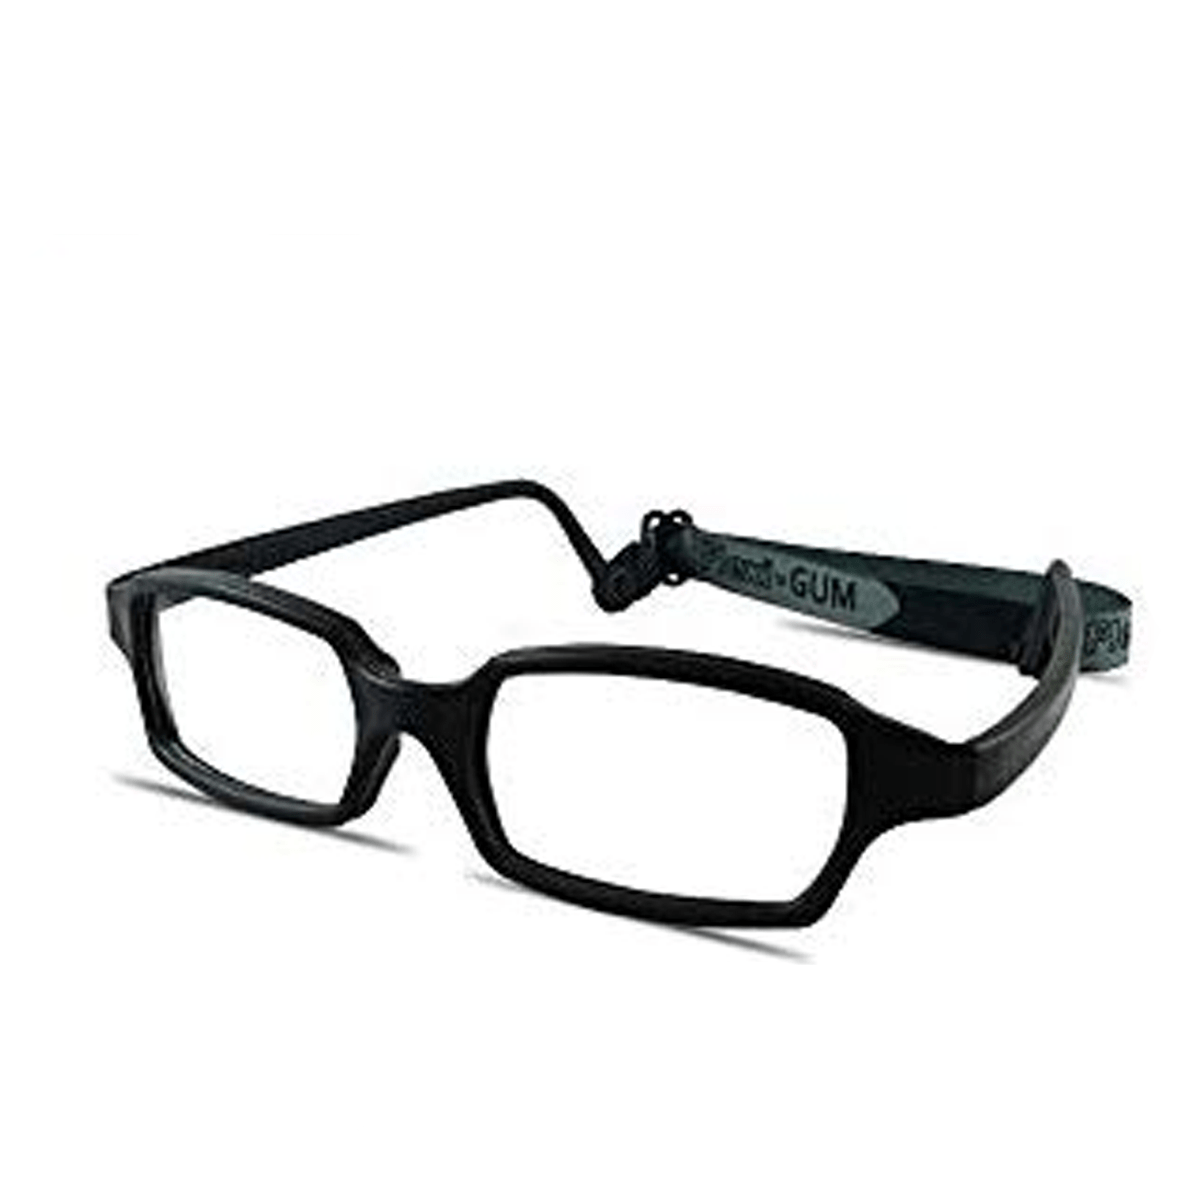 RECTANGULAR Safe-Unbreakable and Flexible Kids Eyeglasses Frame with Strap - Flexi-GUM